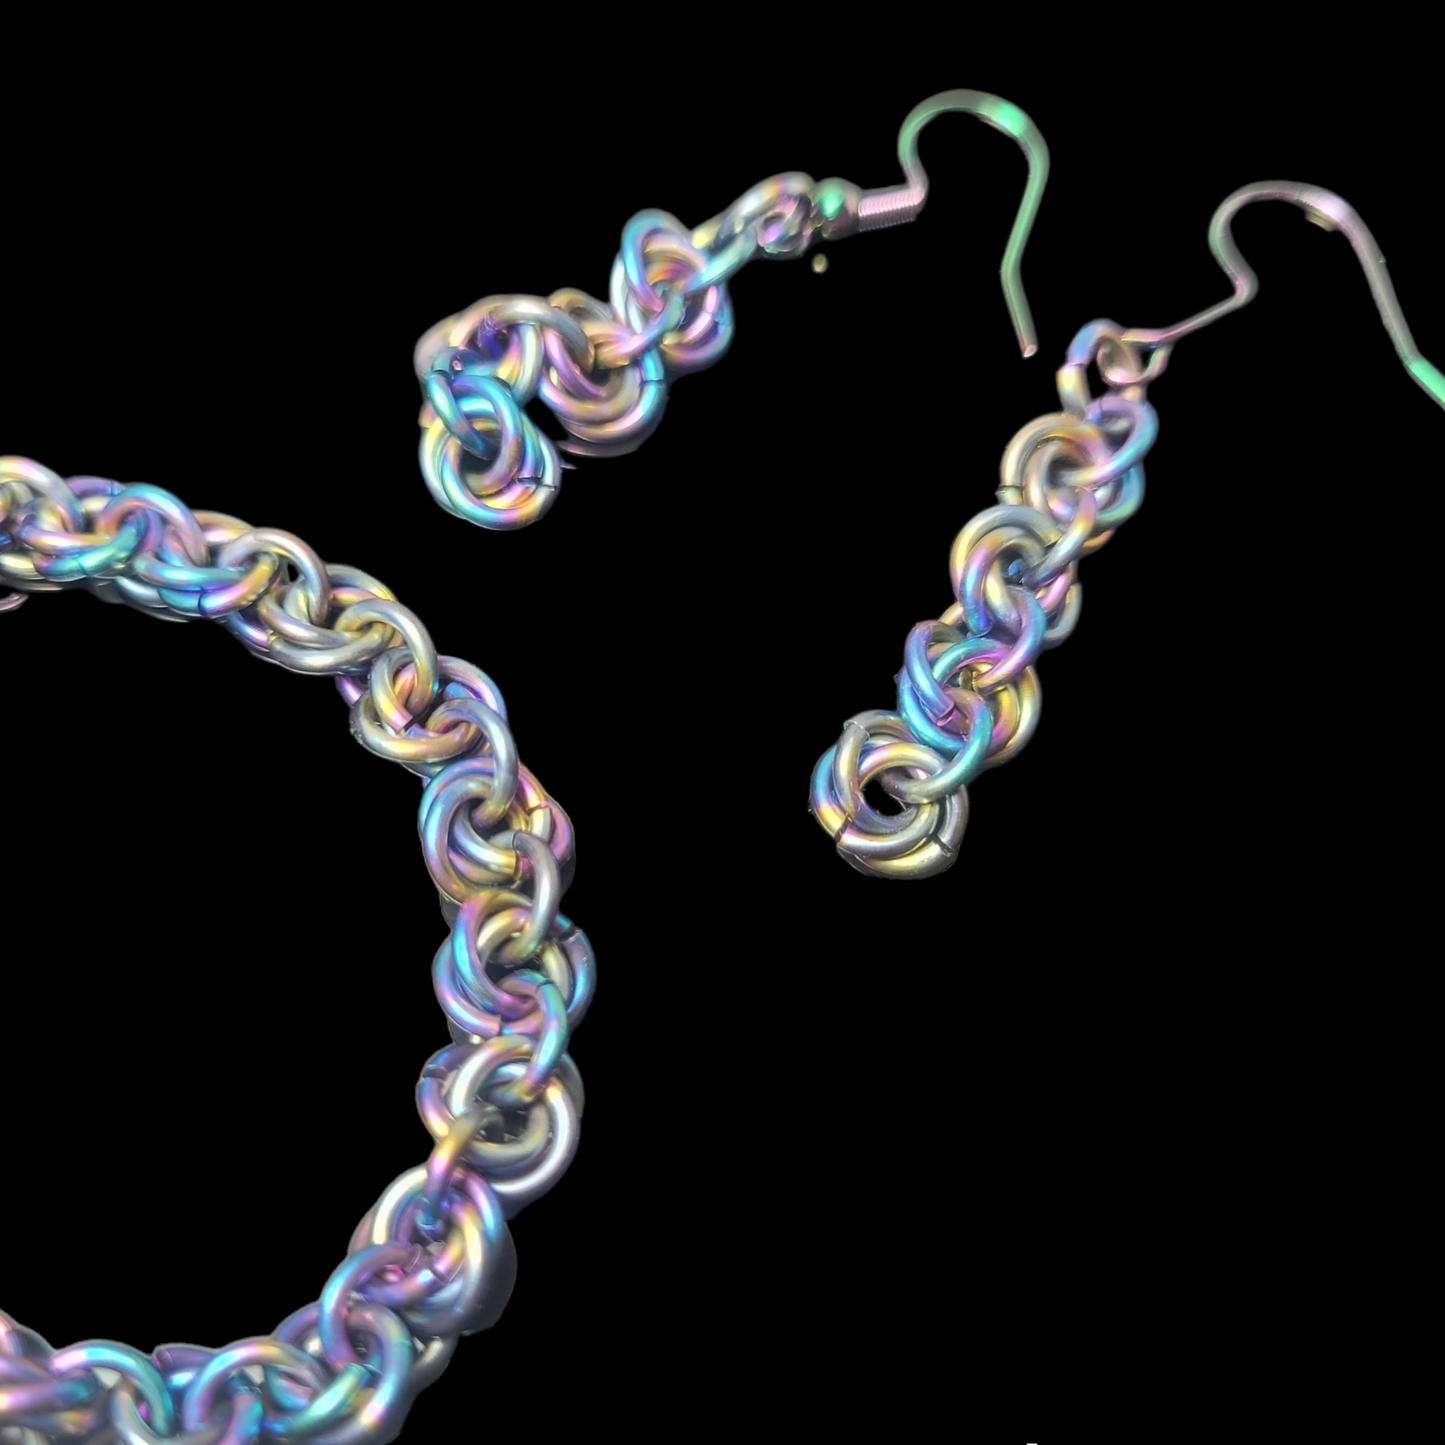 Rainbow rosette chainmail jewelery set